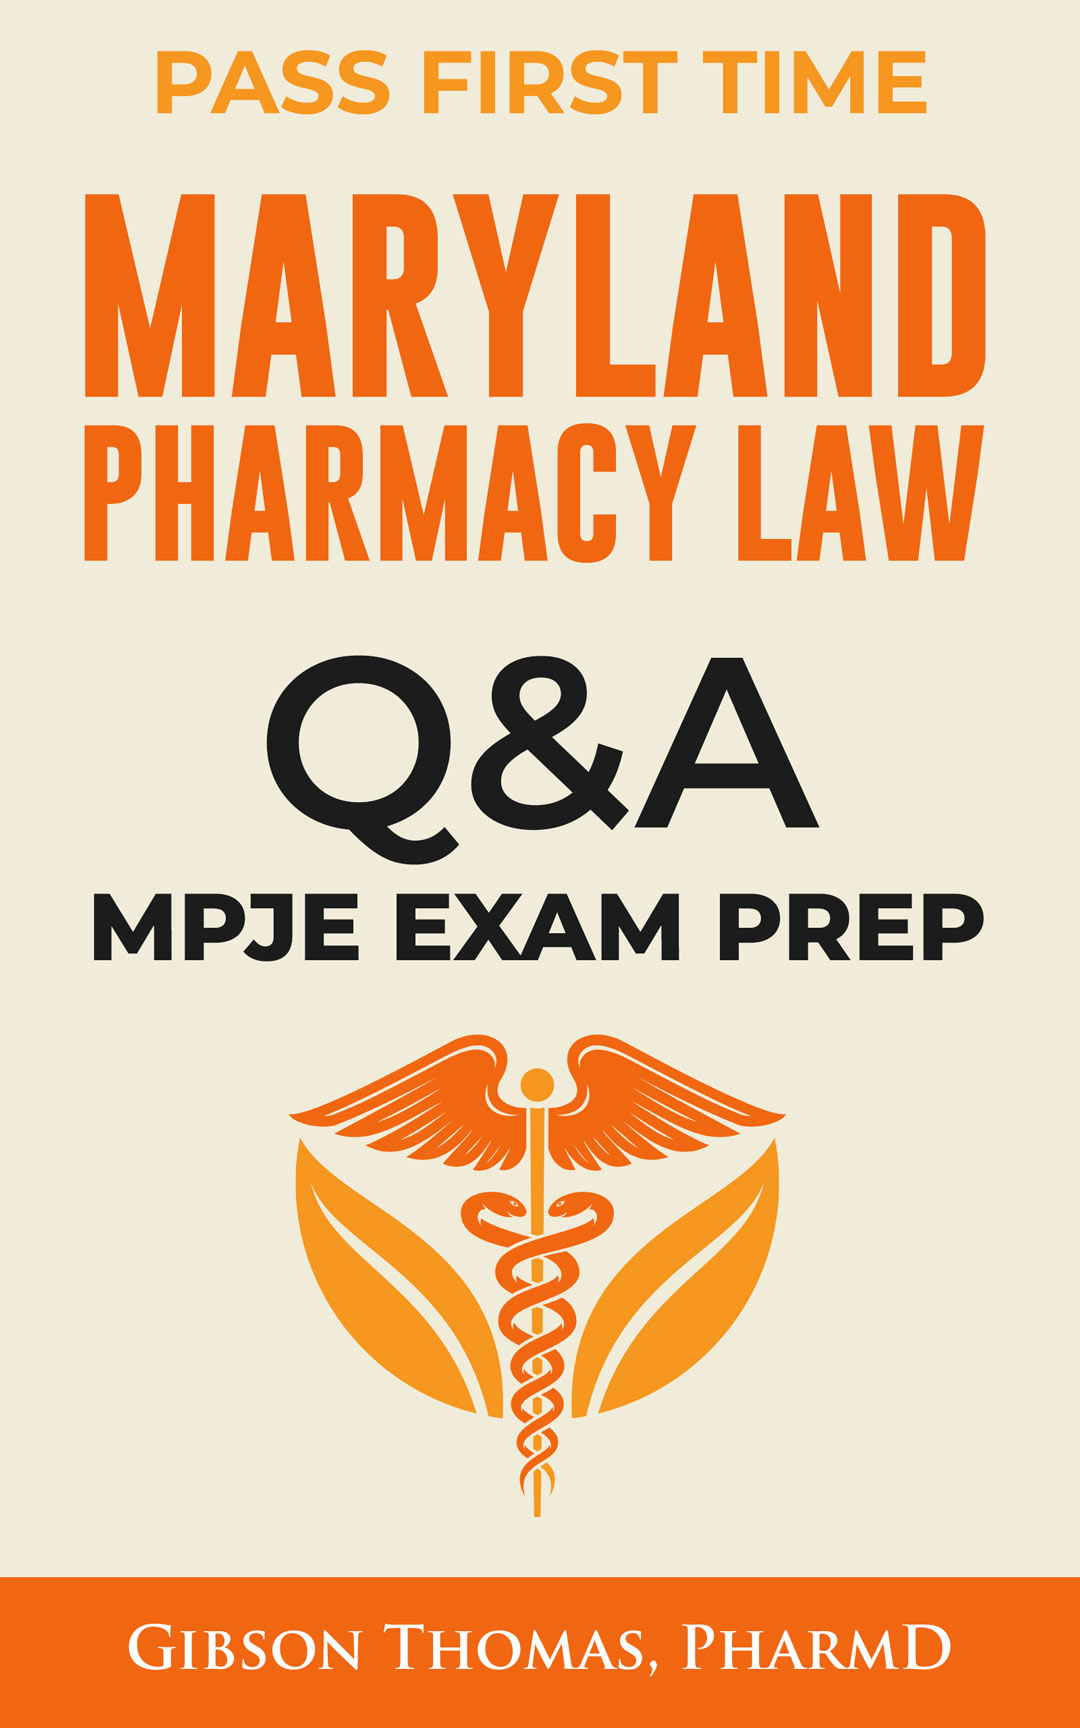 Maryland Pharmacy Law MPJE Exam Prep Q & A